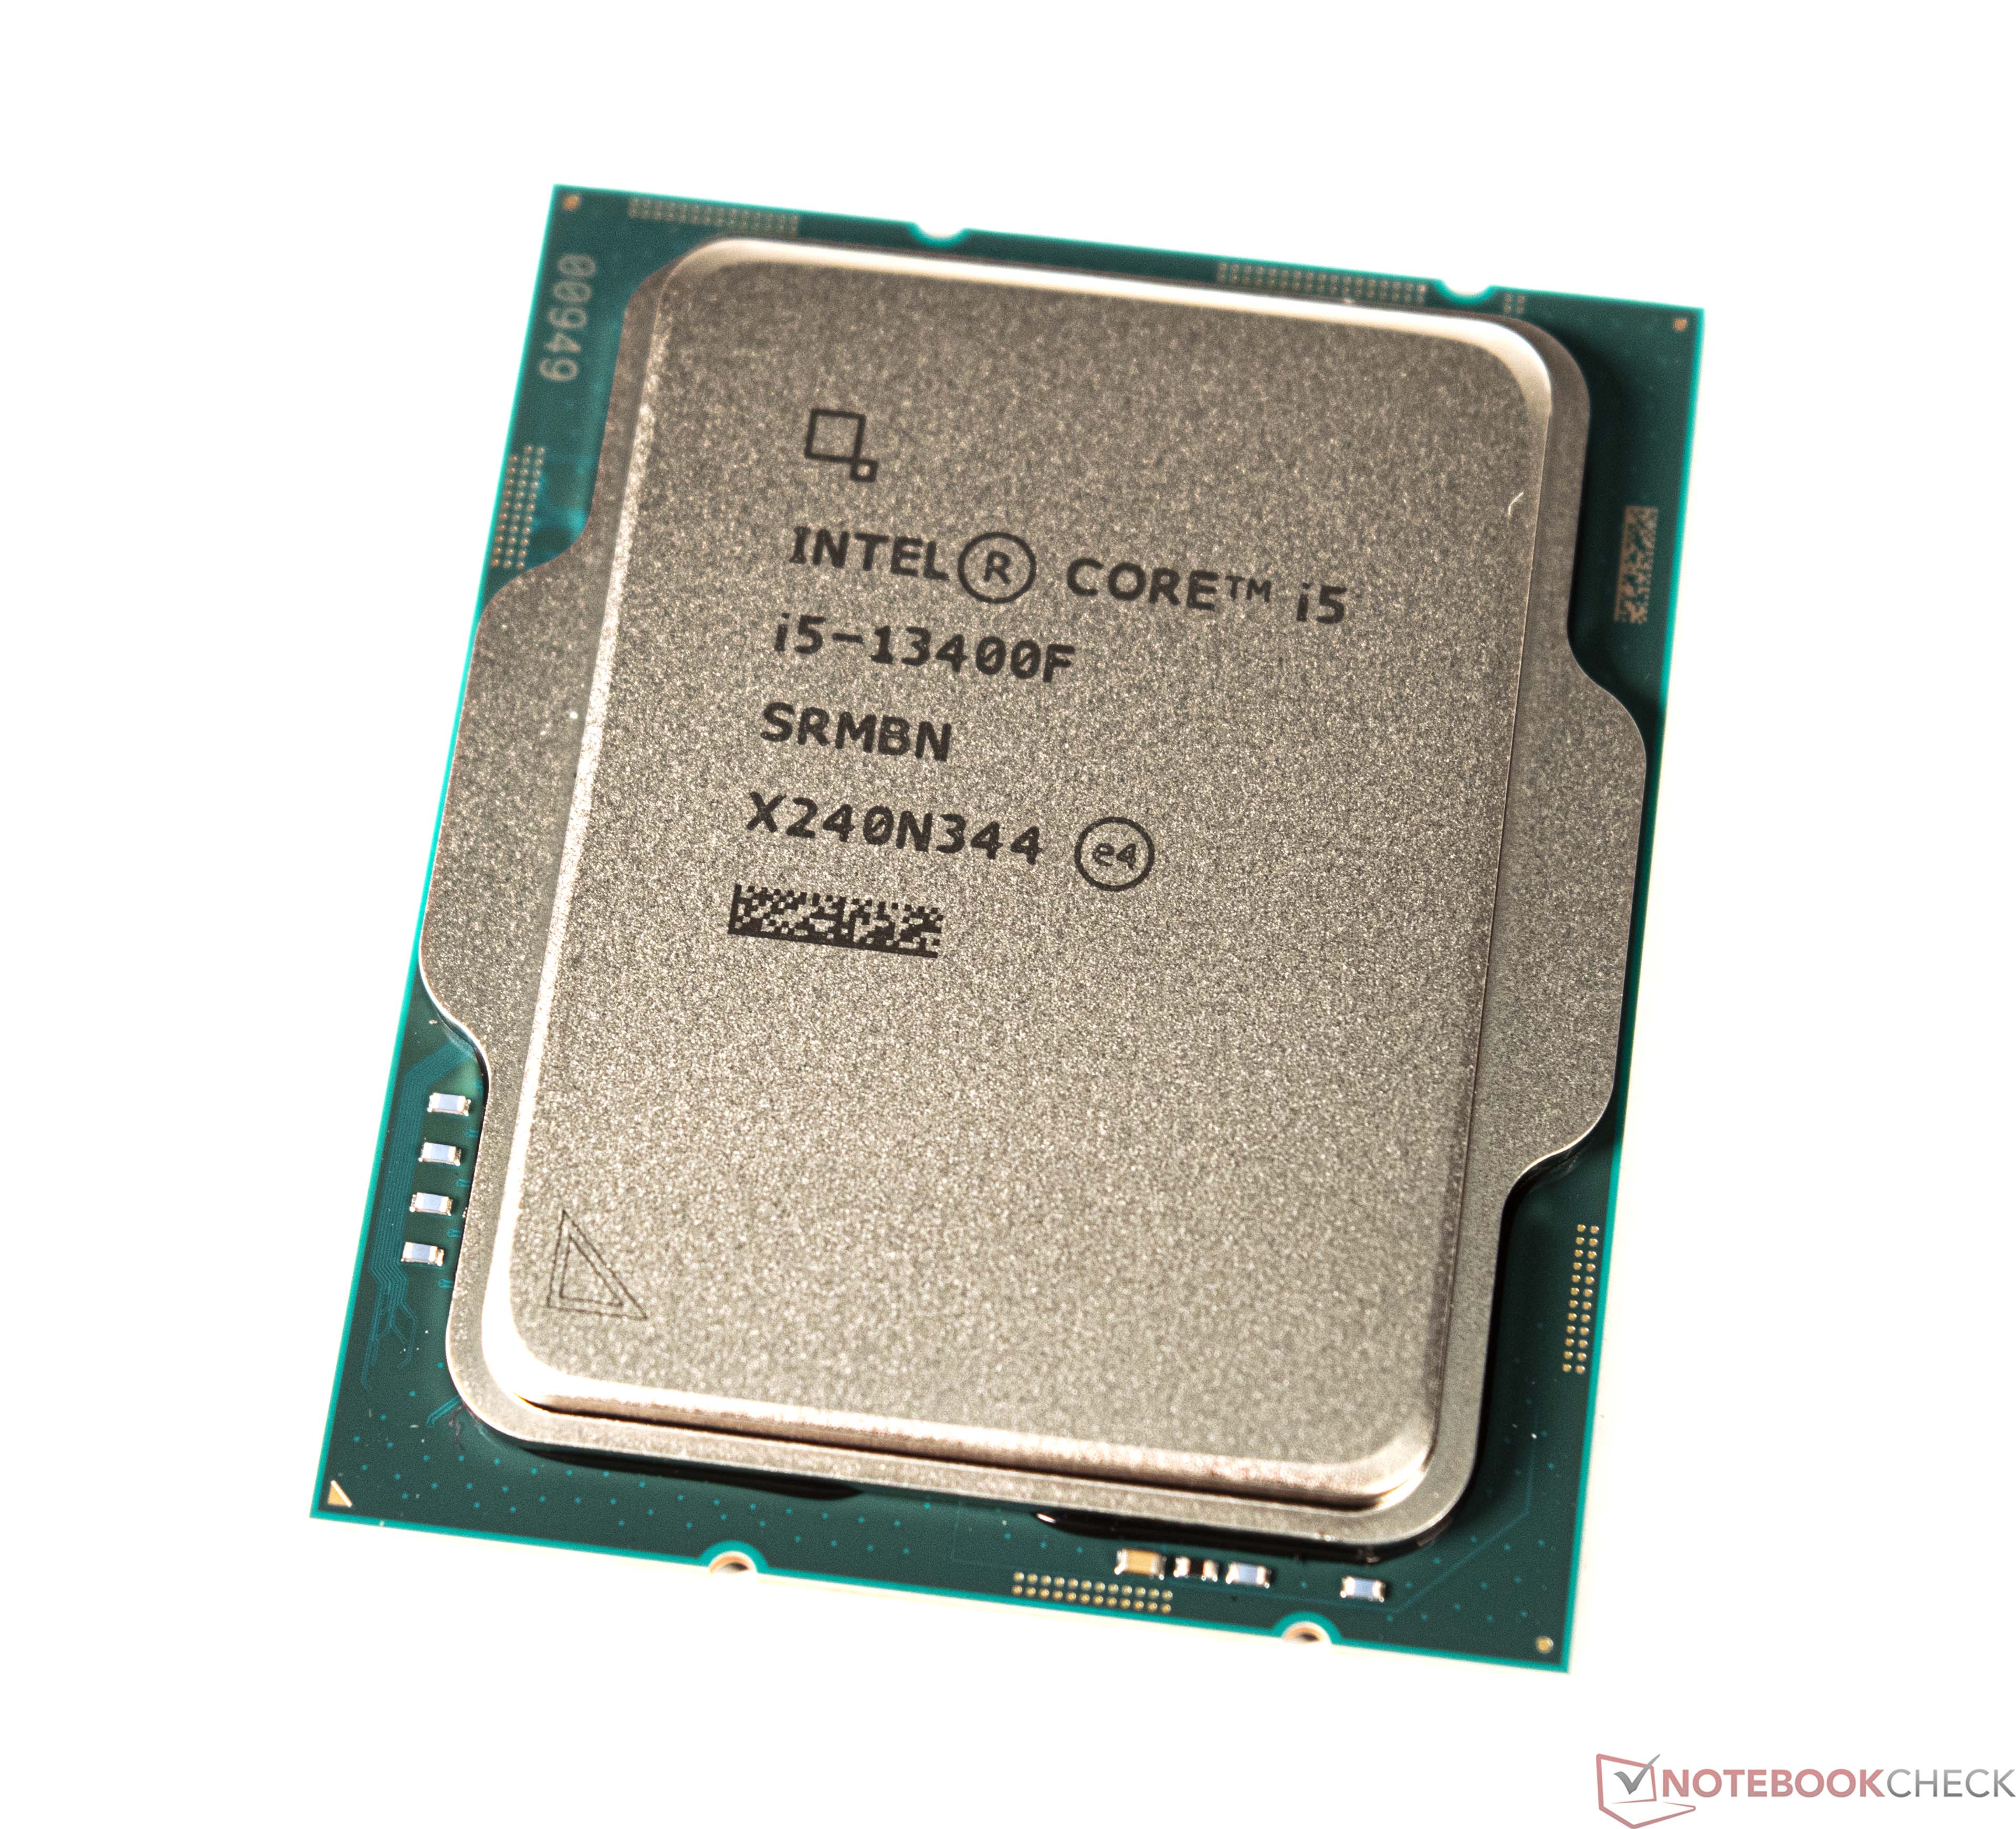 Intel Core i5-13400F Processor - Benchmarks and Specs